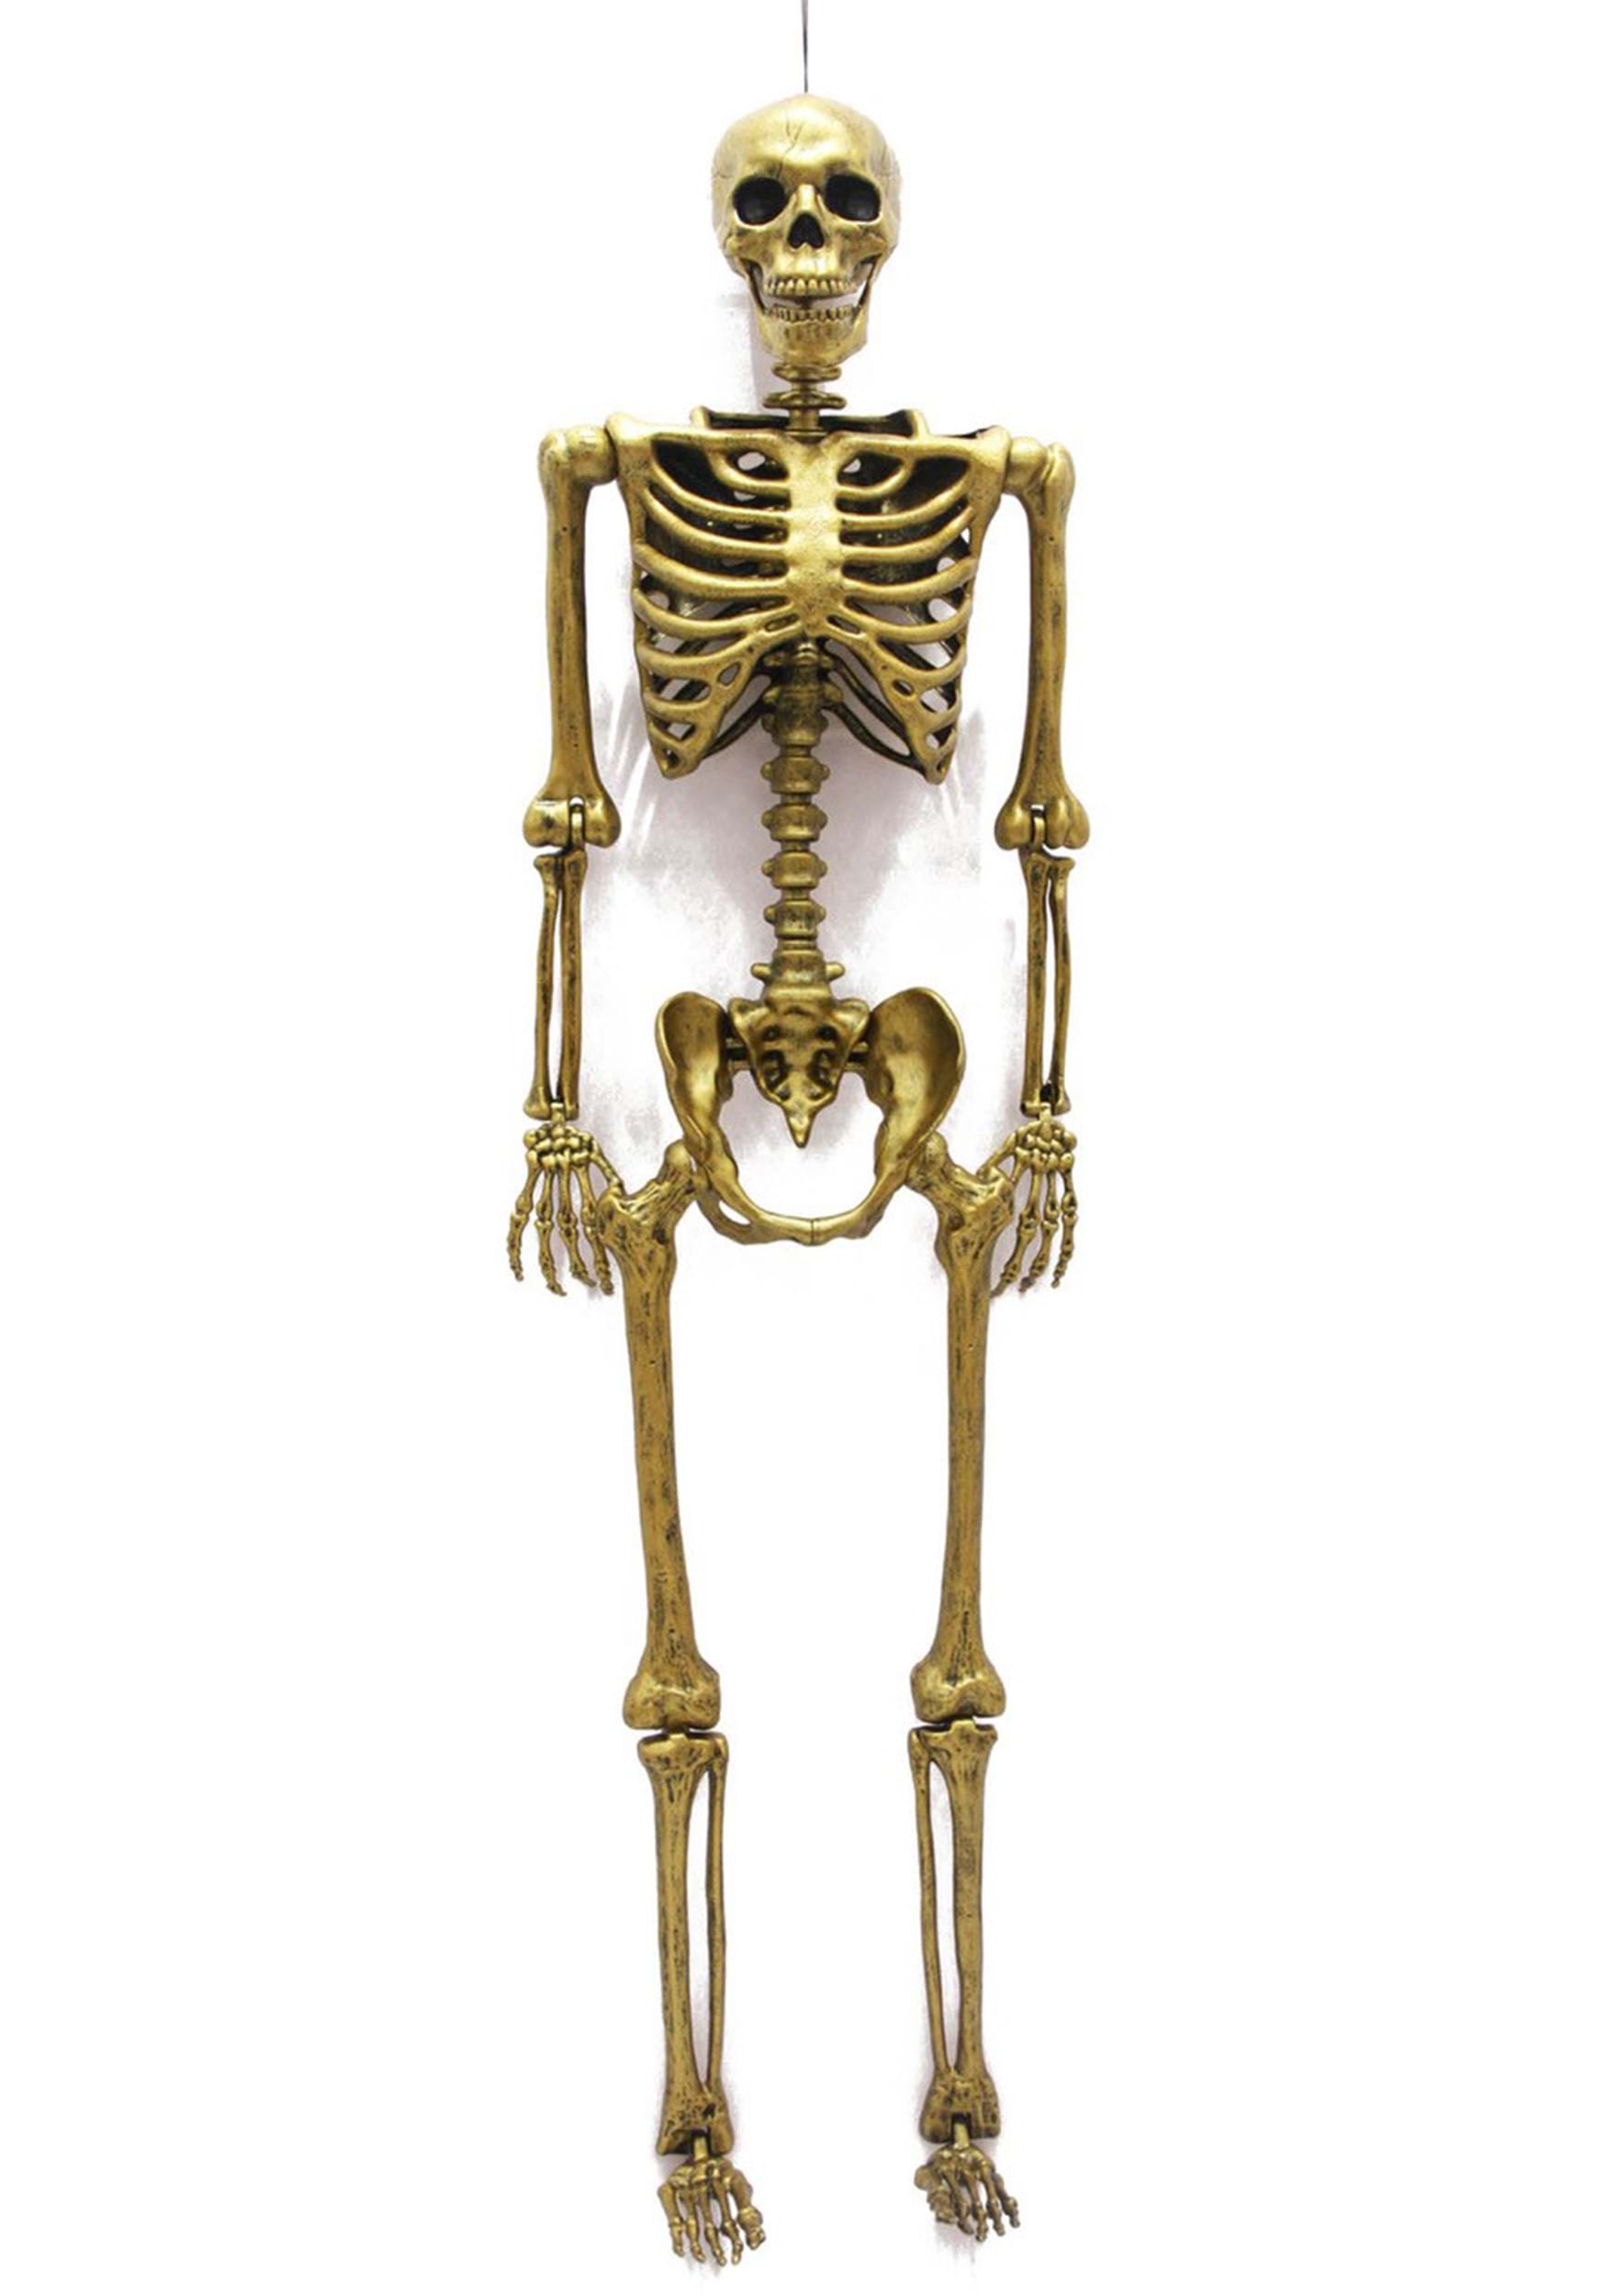 plastic-life-sized-skeleton-model-67-height-klm-bio-scientific